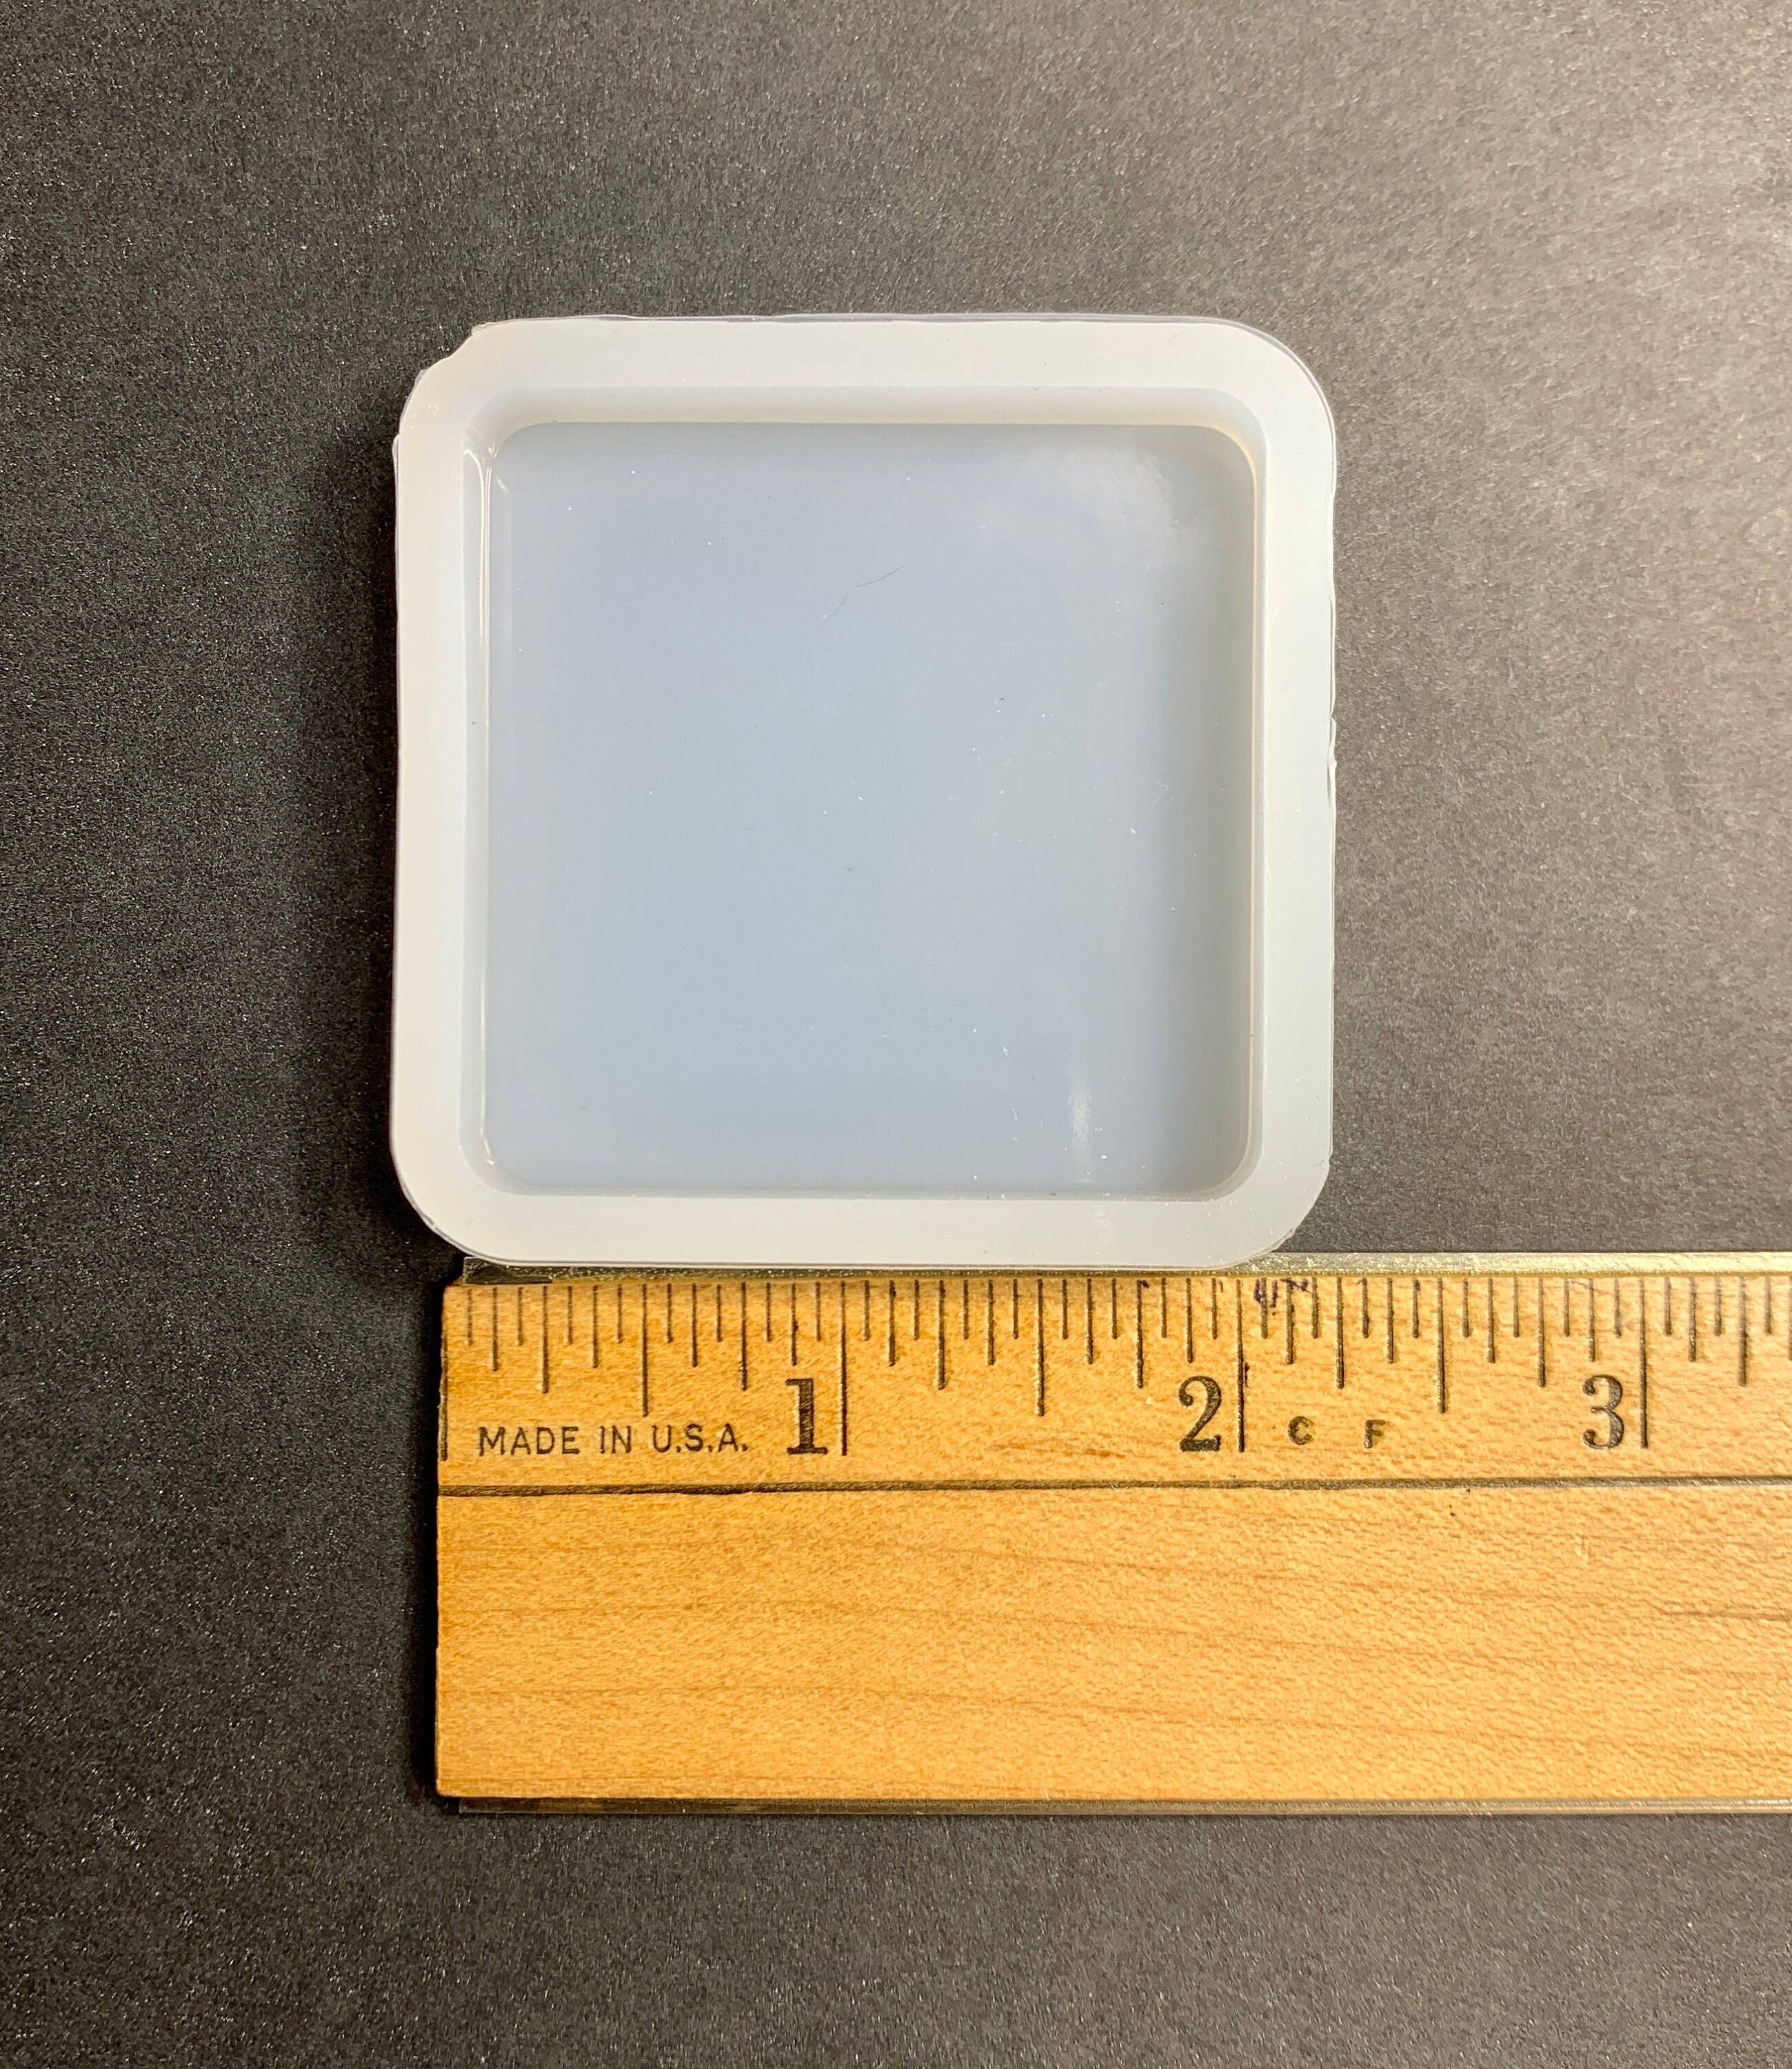 OVERSTOCKED - Small Squares Resin Molds - 10-pack bulk savings